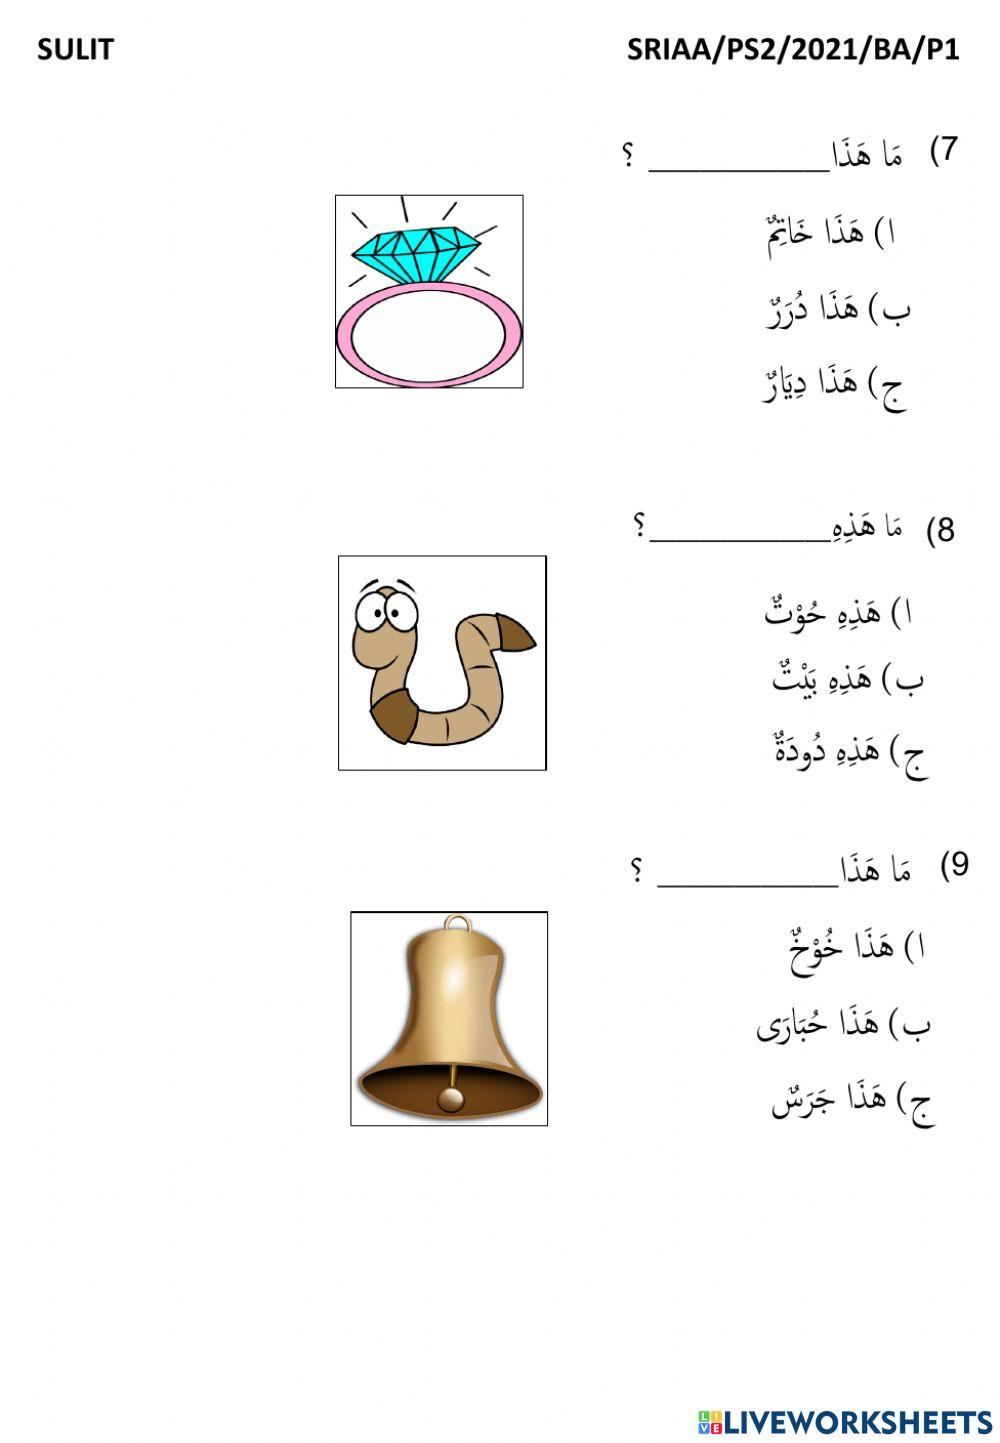 Pentaksiran sumatif 2  bahasa arab tahun 12021